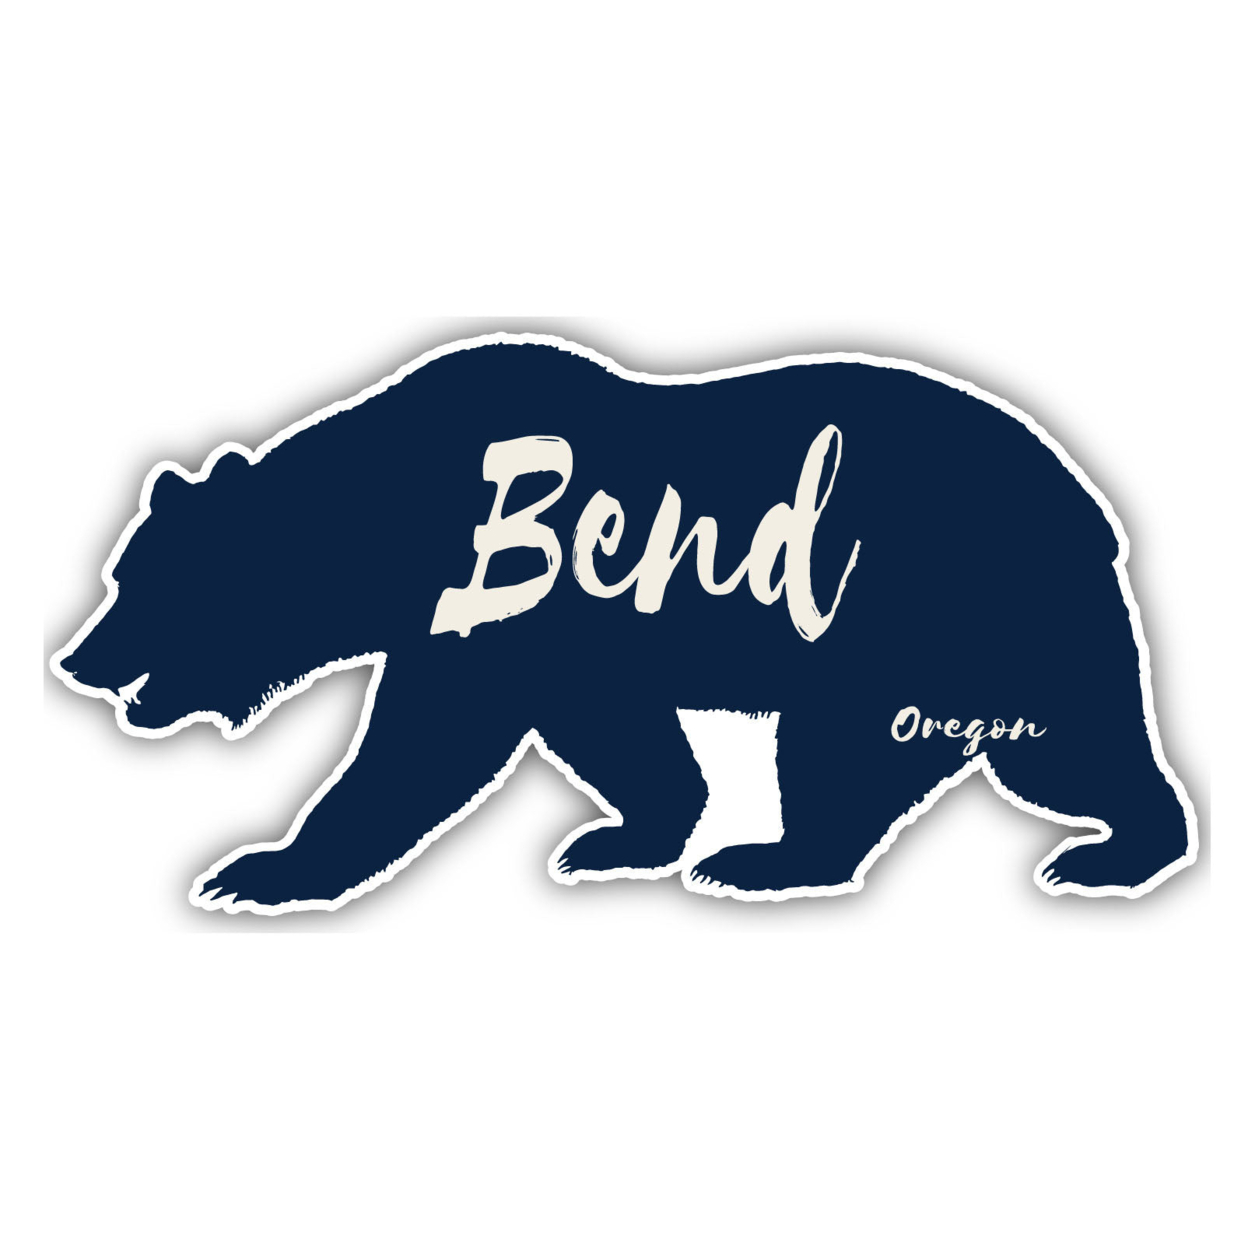 Bend Oregon Souvenir Decorative Stickers (Choose Theme And Size) - Single Unit, 4-Inch, Adventures Awaits